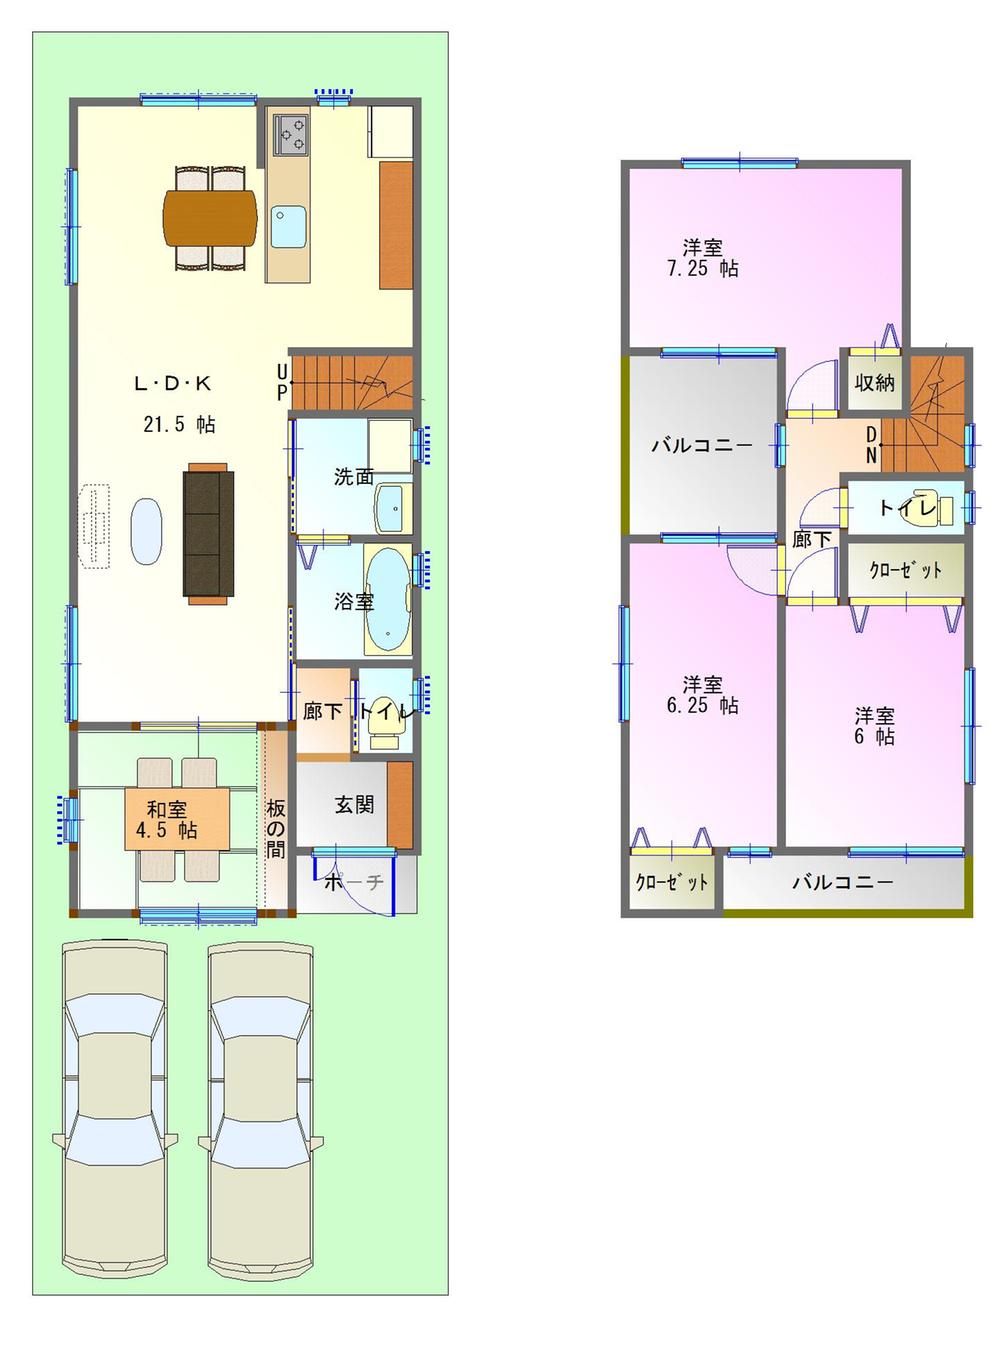 Building plan example (floor plan). Building plan example (No. 5 locations) 4LDK, Land price 20,050,000 yen, Land area 109.16 sq m , Building price 15,750,000 yen, Building area 98 sq m